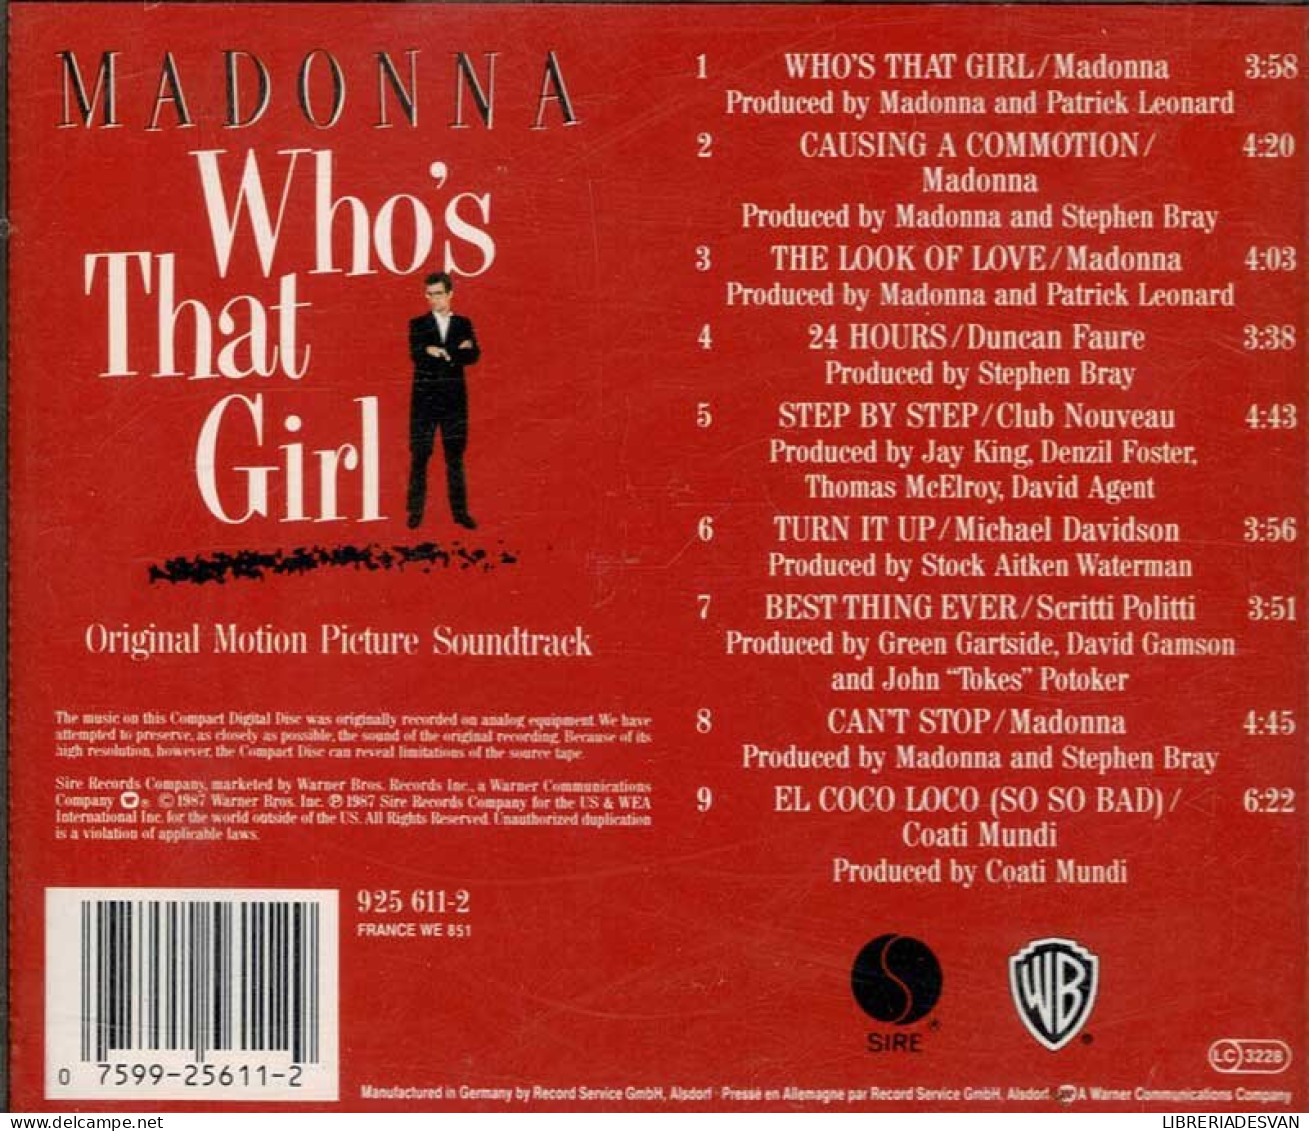 Madonna - Who's That Girl (Original Motion Picture Soundtrack). CD - Soundtracks, Film Music